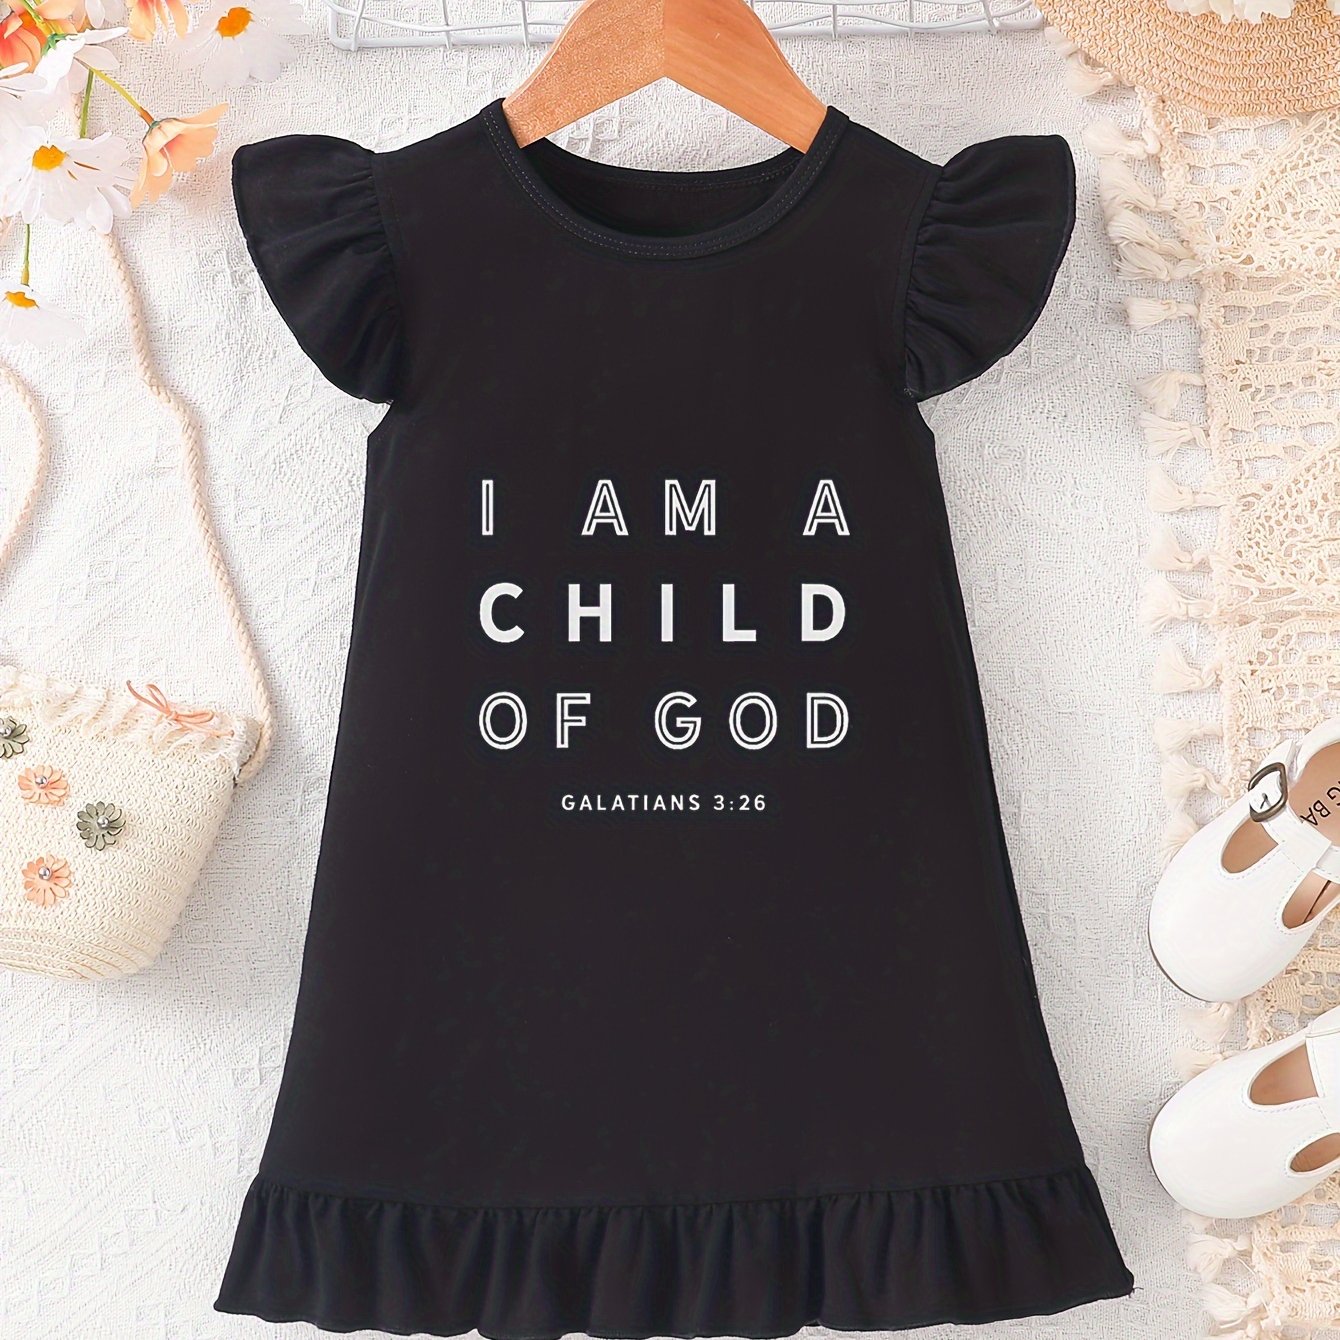 I AM A CHILD OF GOD Christian Toddler Dress claimedbygoddesigns